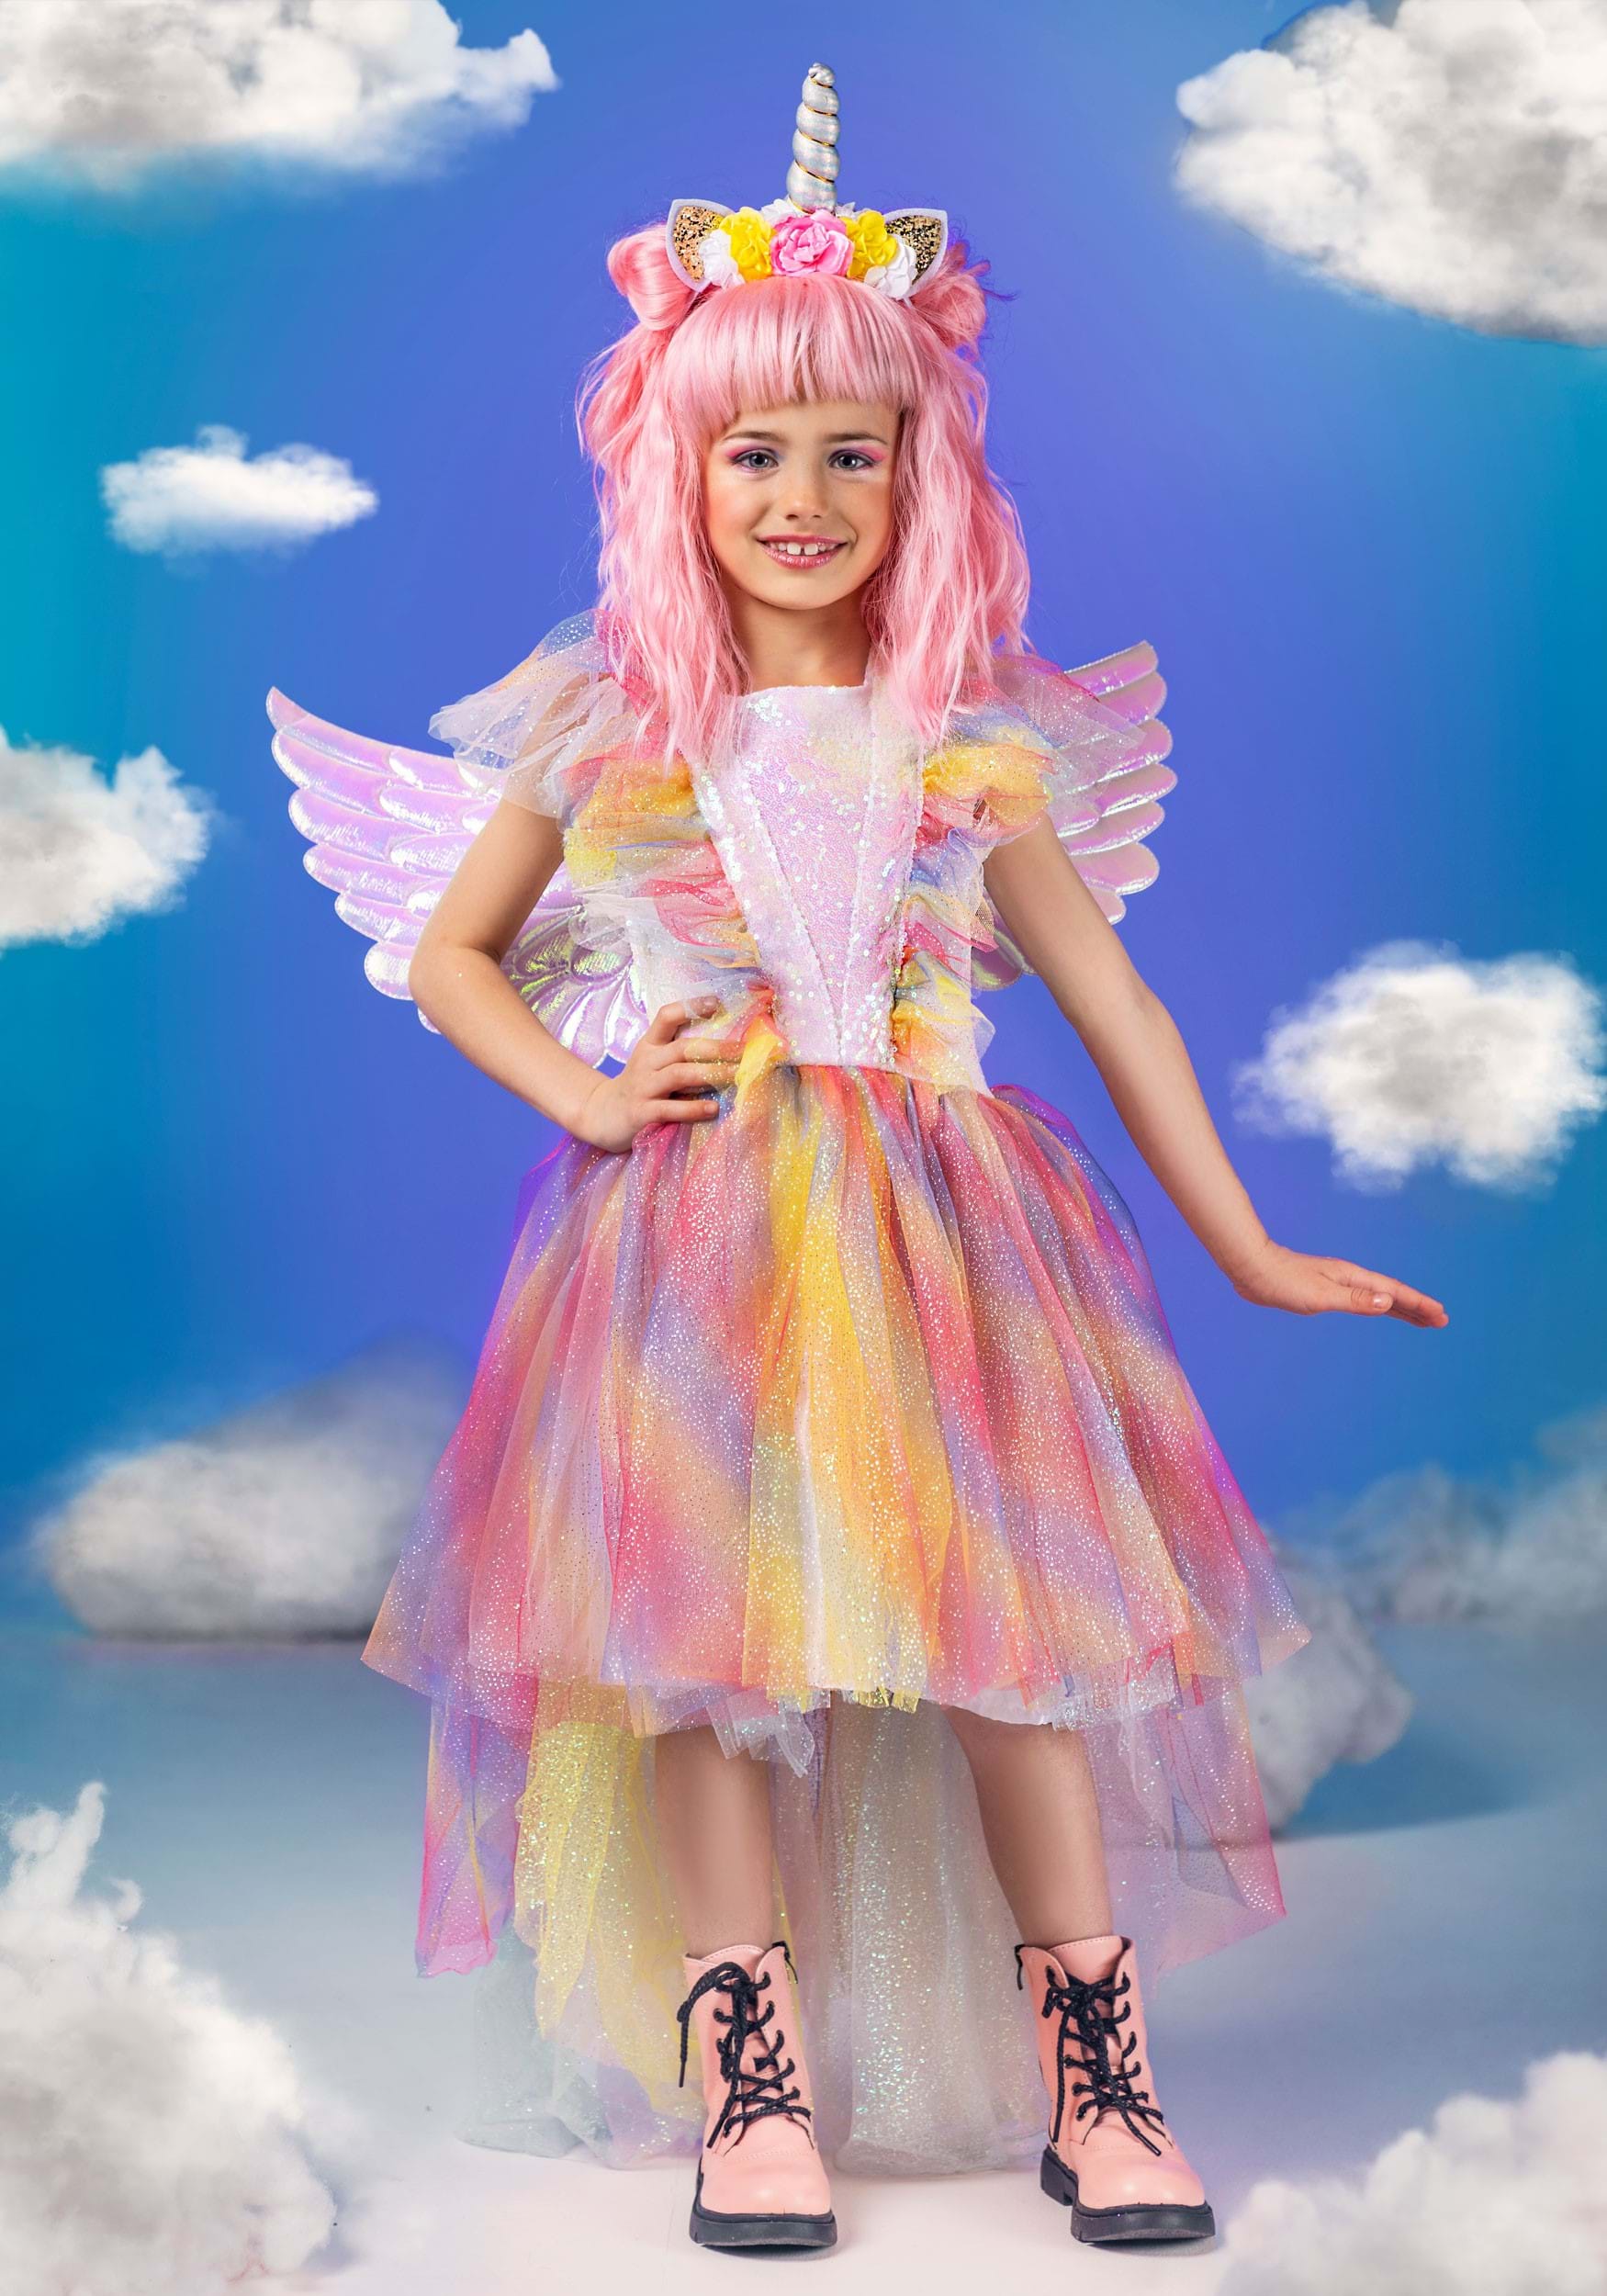 Deluxe Winged Unicorn Girl's Costume